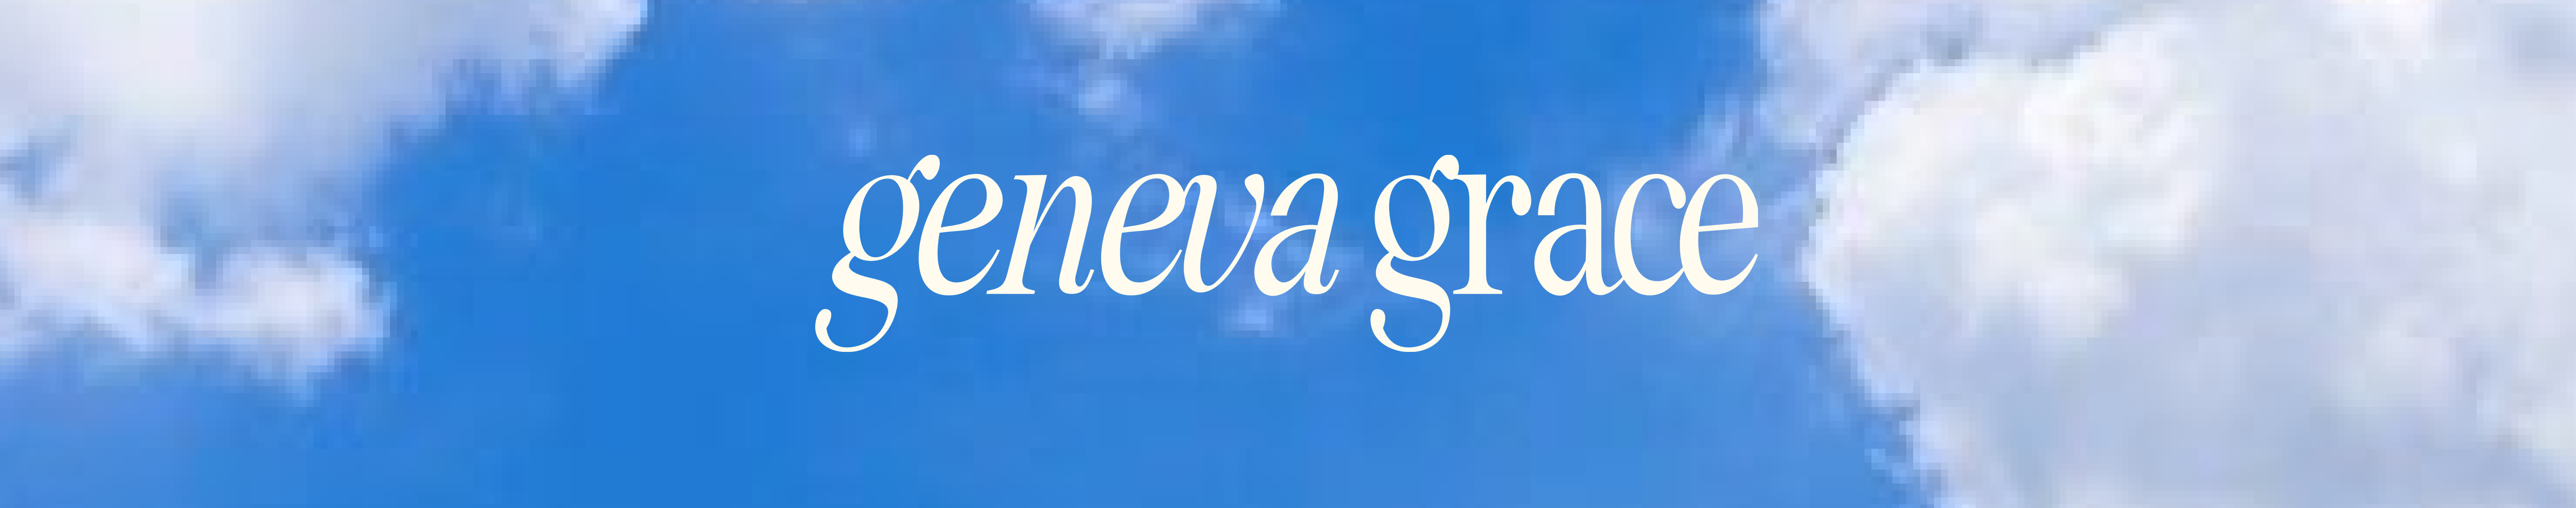 Geneva Grace's profile banner